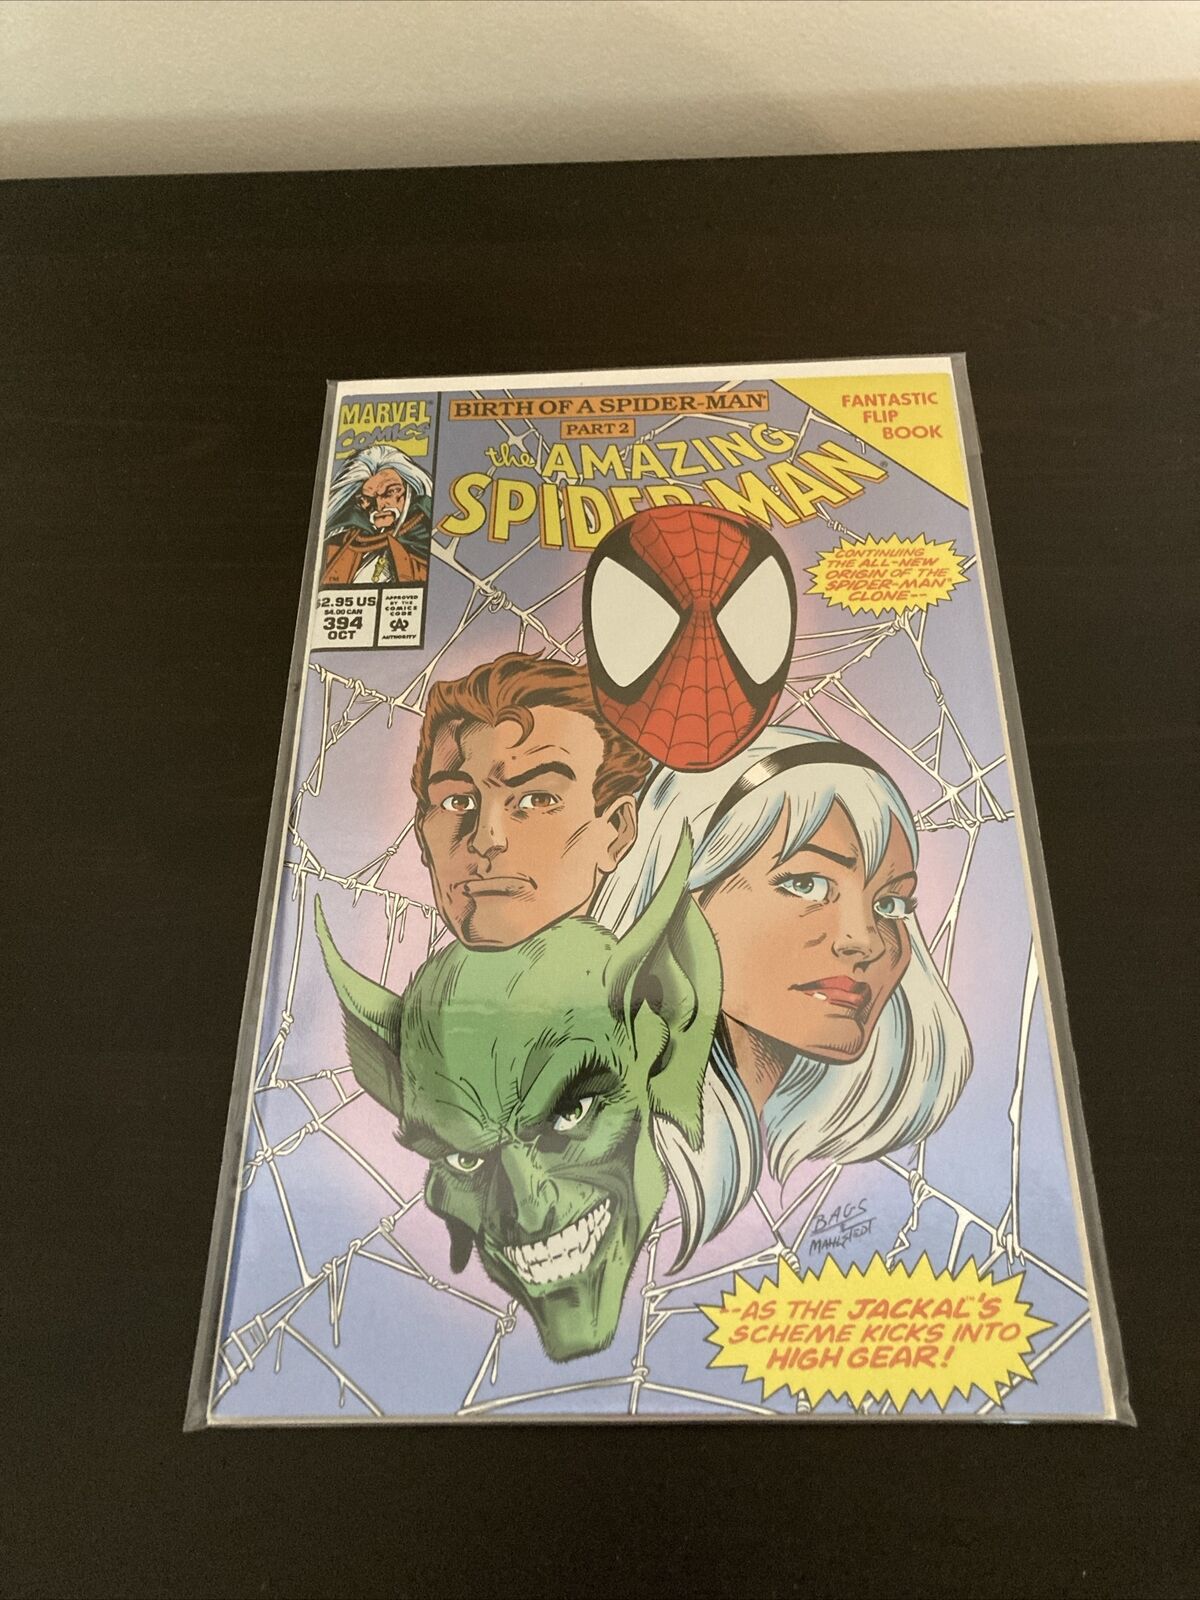 The Amazing Spider-Man #394 Flipbook (Marvel Comics October 1994)